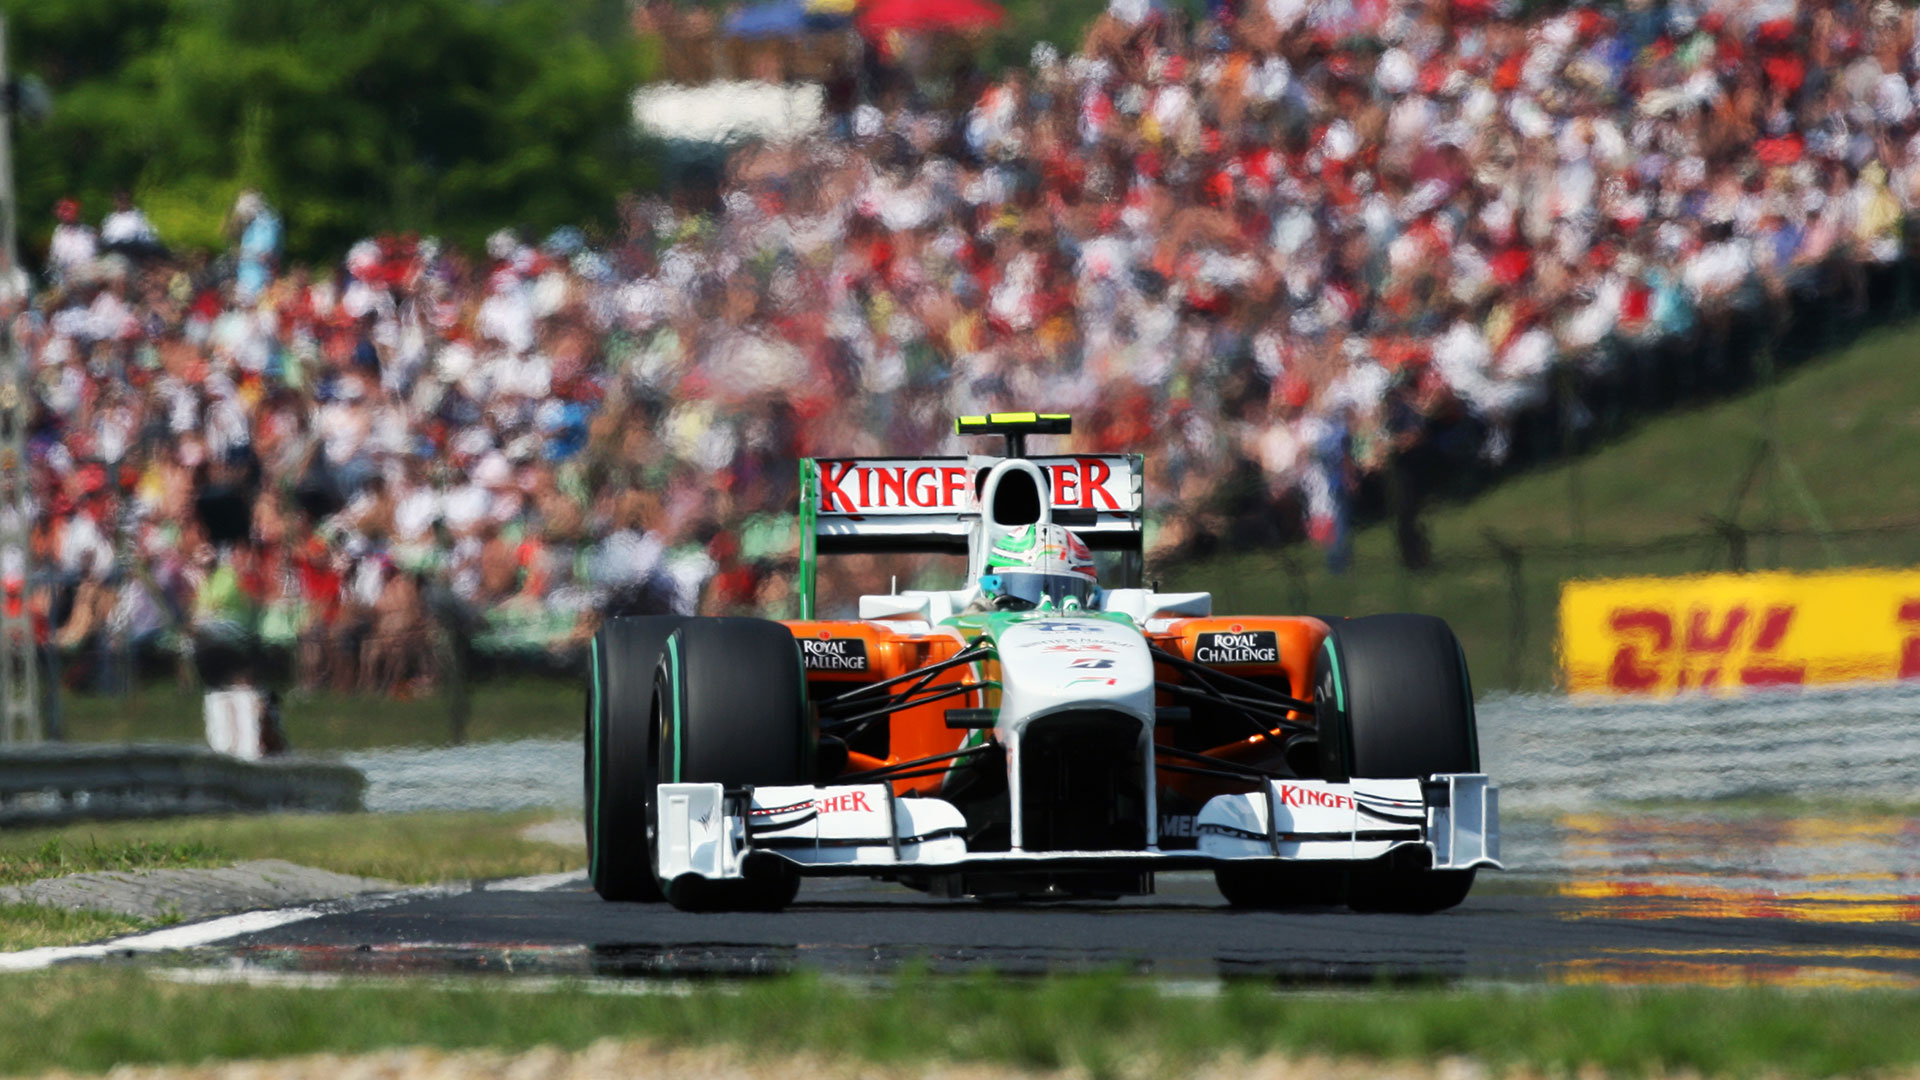 HD Wallpaper Formula Grand Prix Of Hungary F1 Fansite